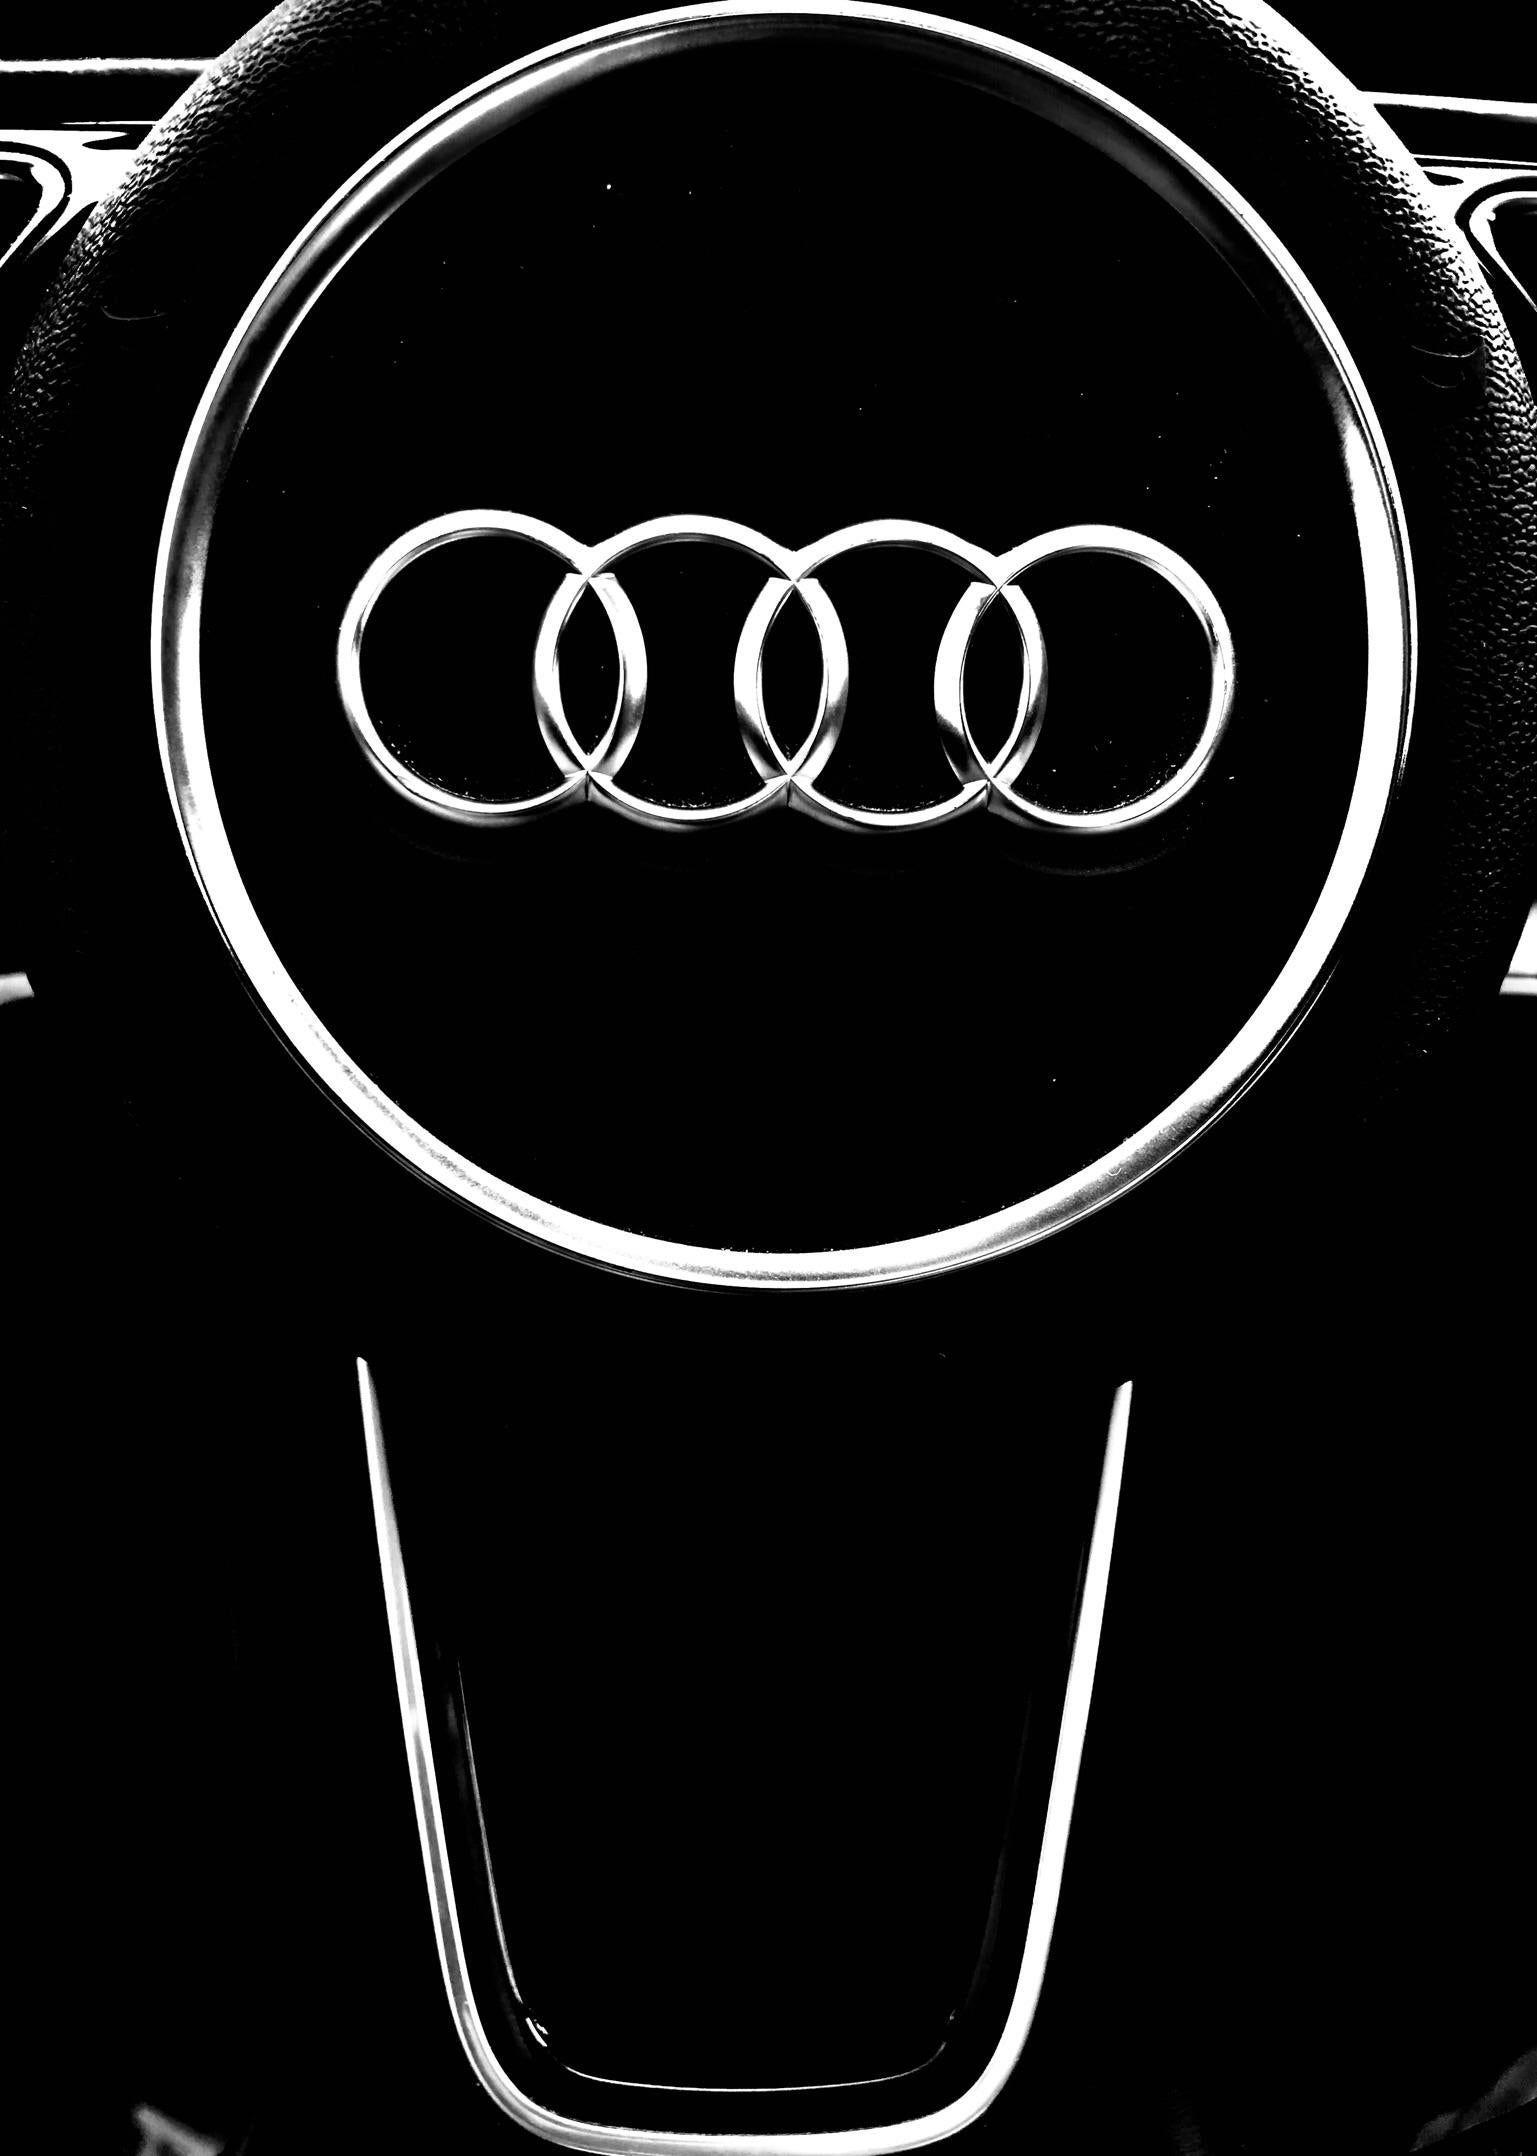 Audi Logo Hd Wallpaper For Iphone